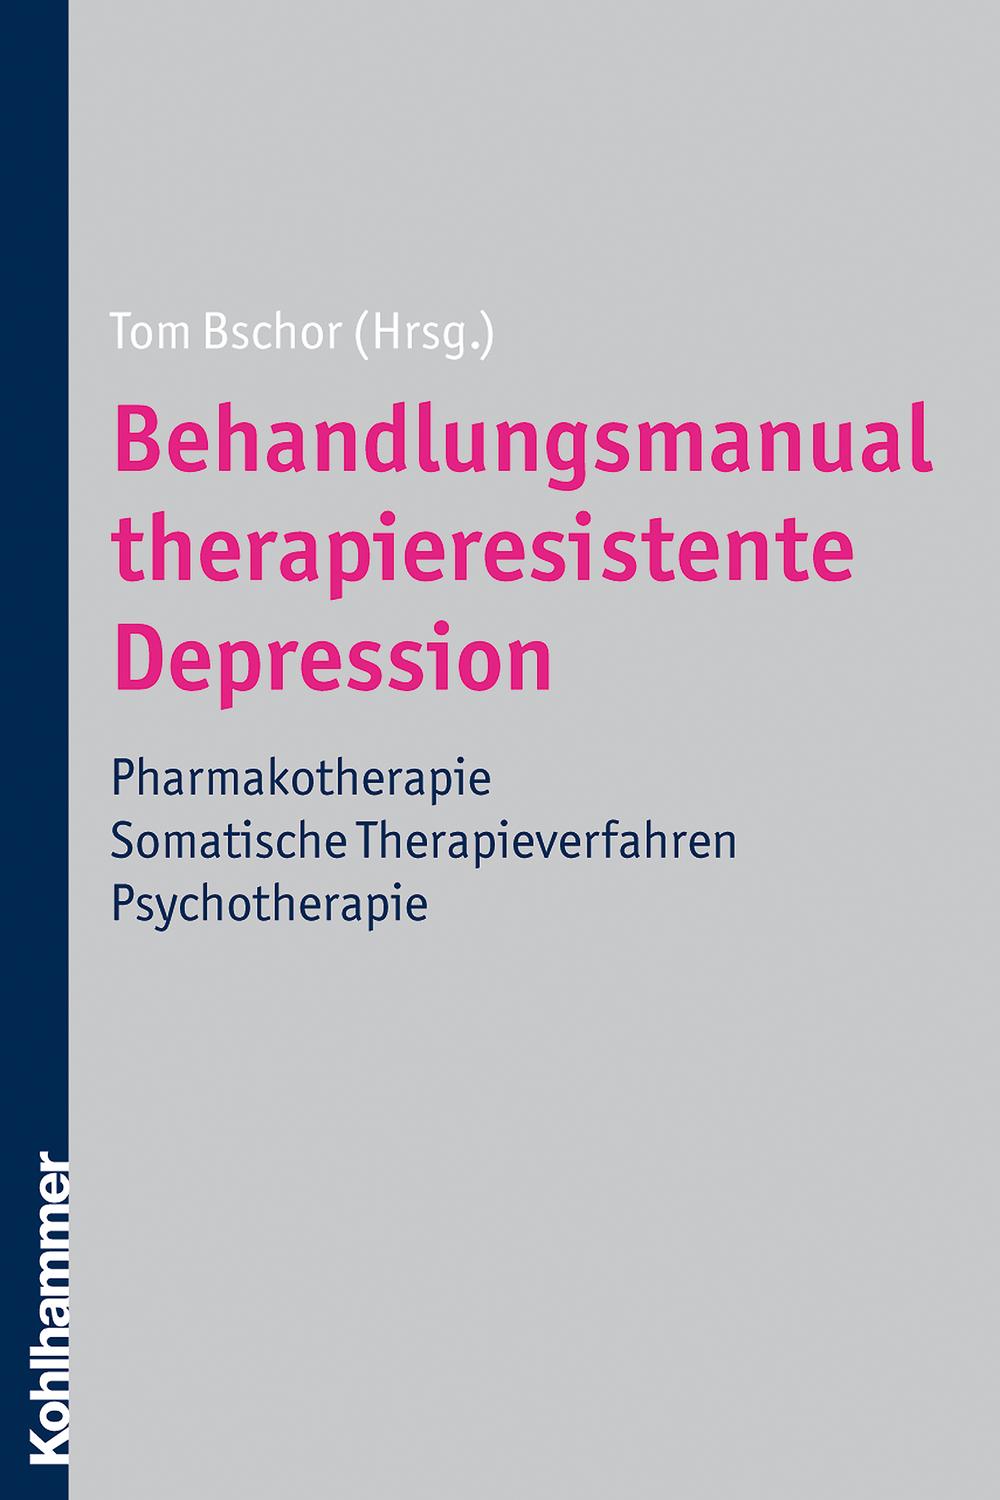 Behandlungsmanual therapieresistente Depression - Tom Bschor